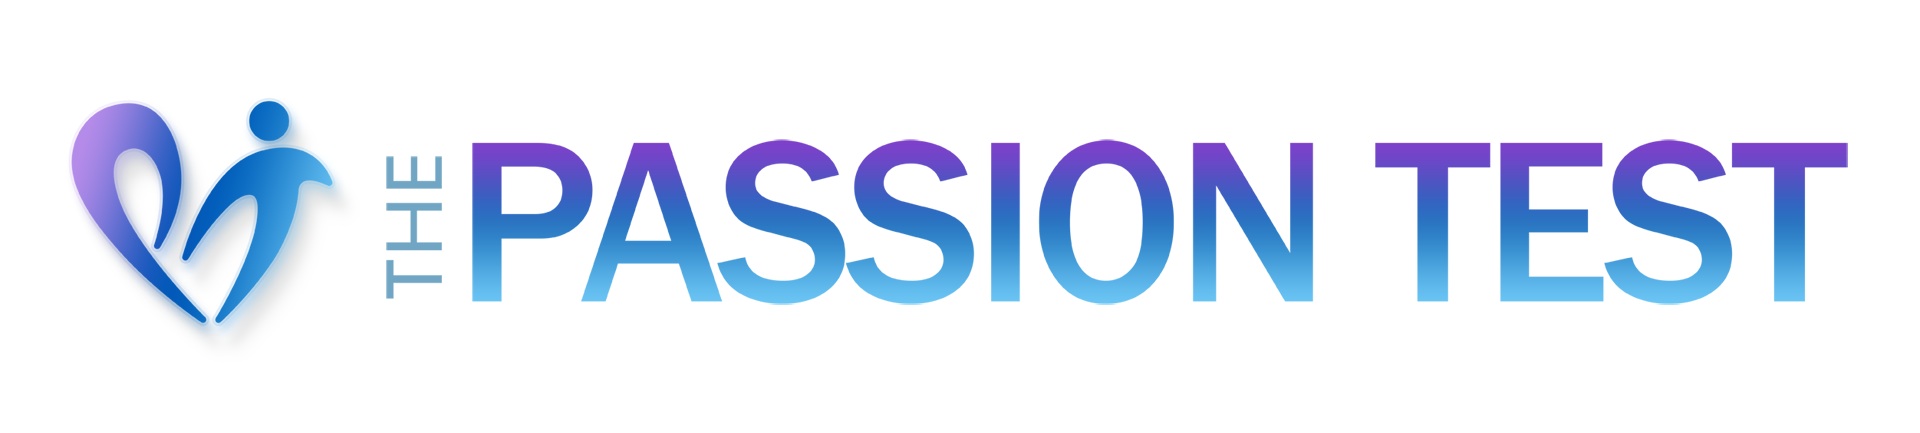 Passion Test logo